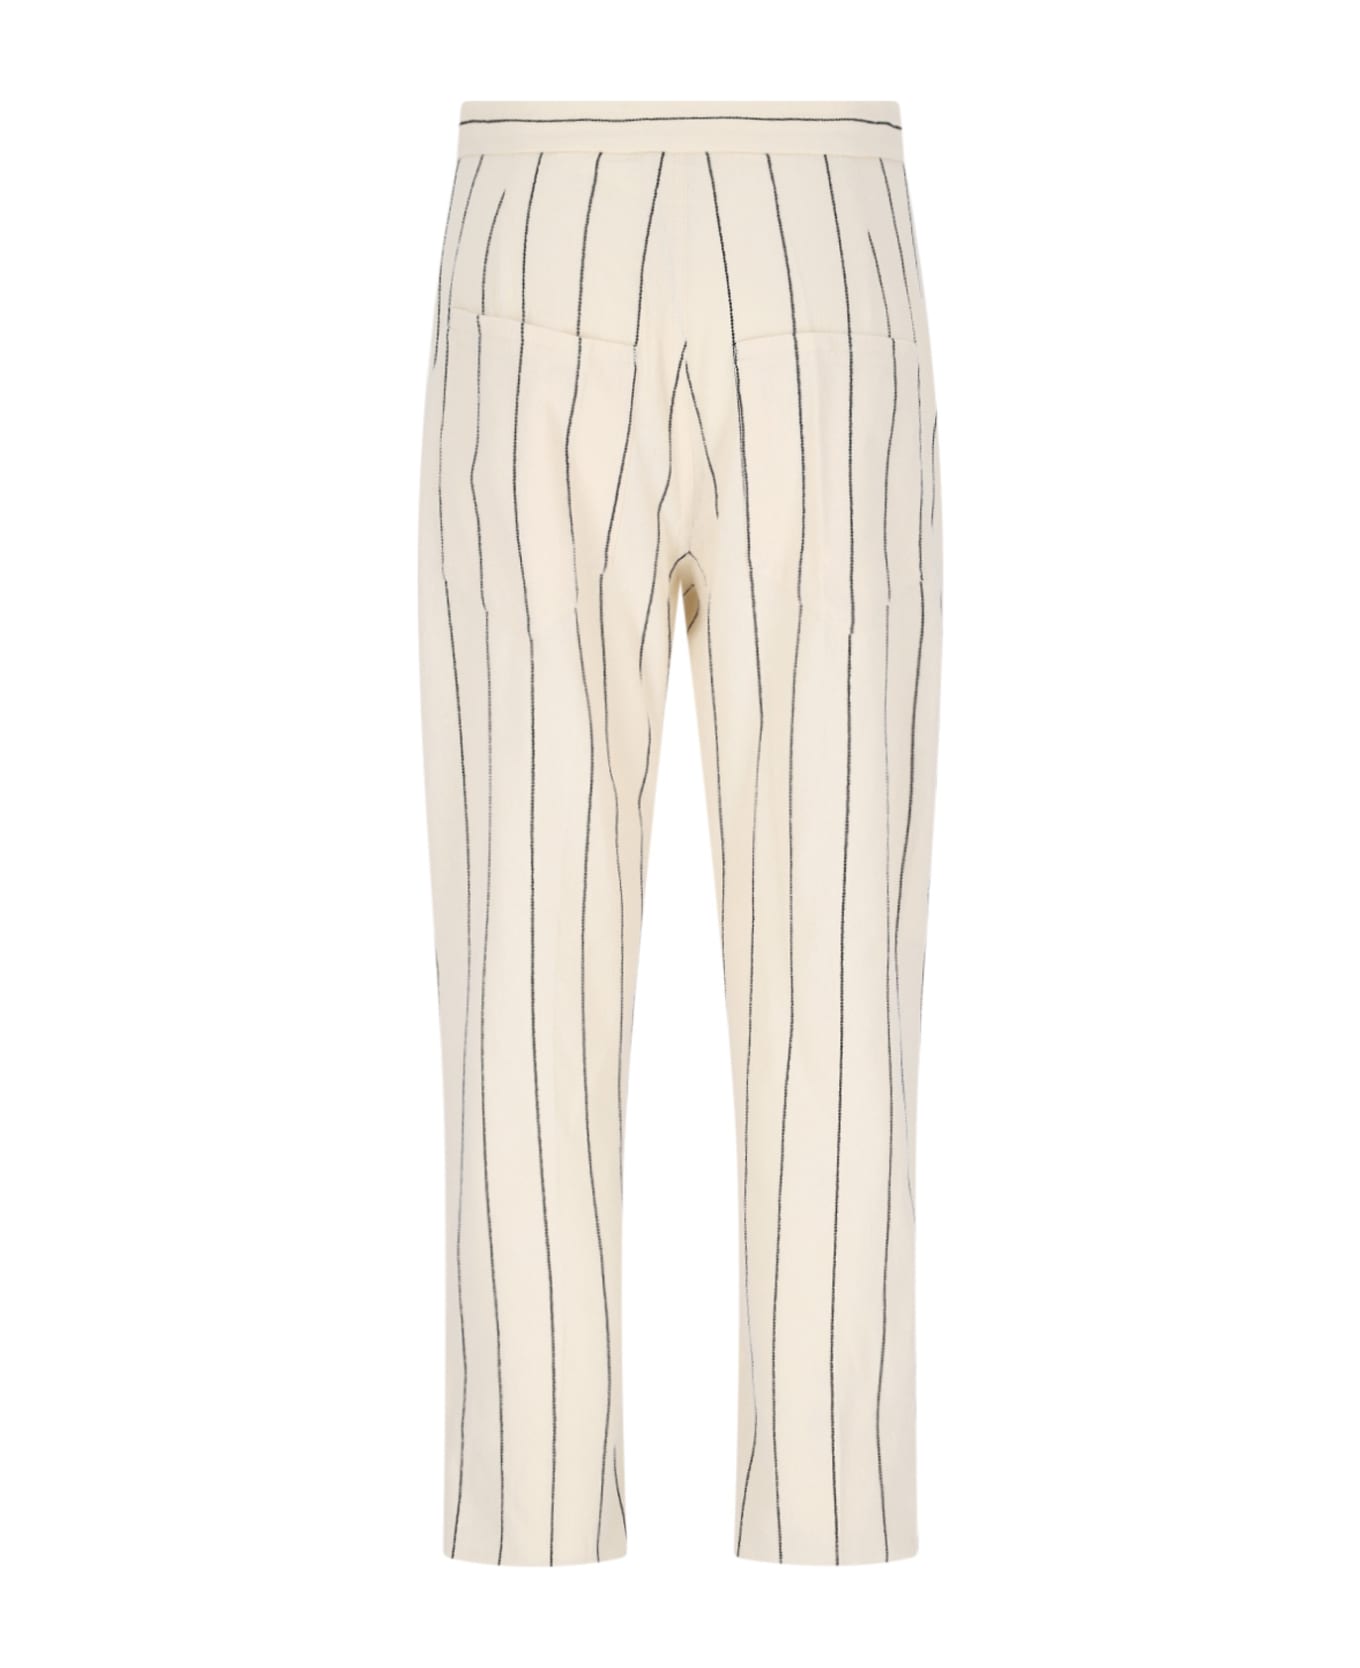 Setchu Striped Pants - Crema